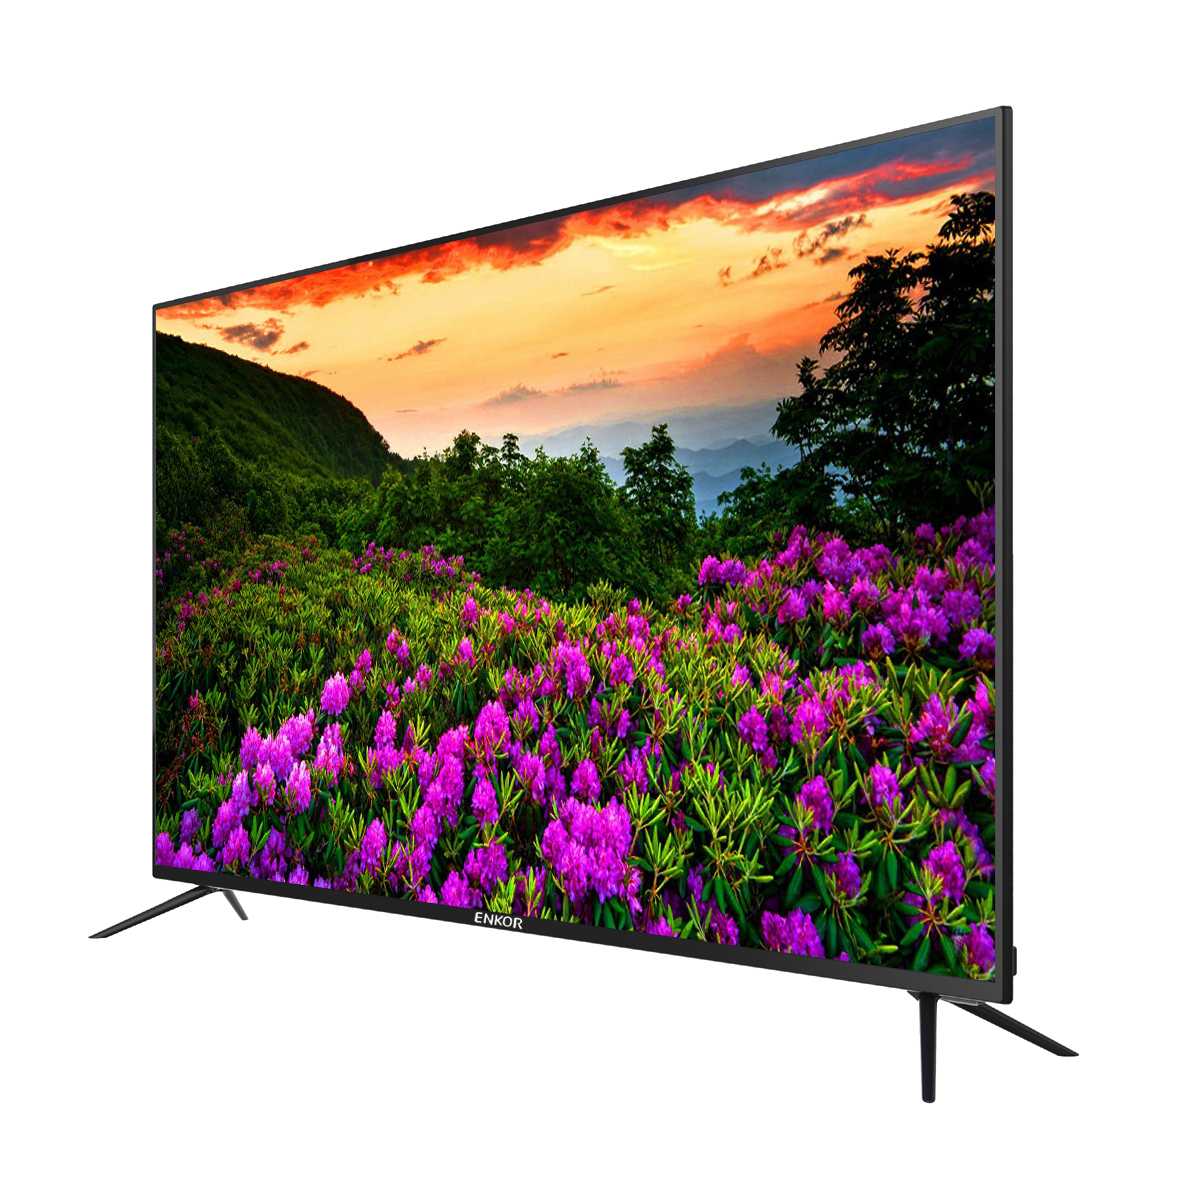 Samsung tv 32 дюймов. Телевизор хиаоми 32 дюйма смарт ТВ. Телевизор самсунг 32 дюйма смарт ТВ. Телевизор LG 32 дюйма смарт ТВ. Телевизор хиаоми 43 дюйма смарт.